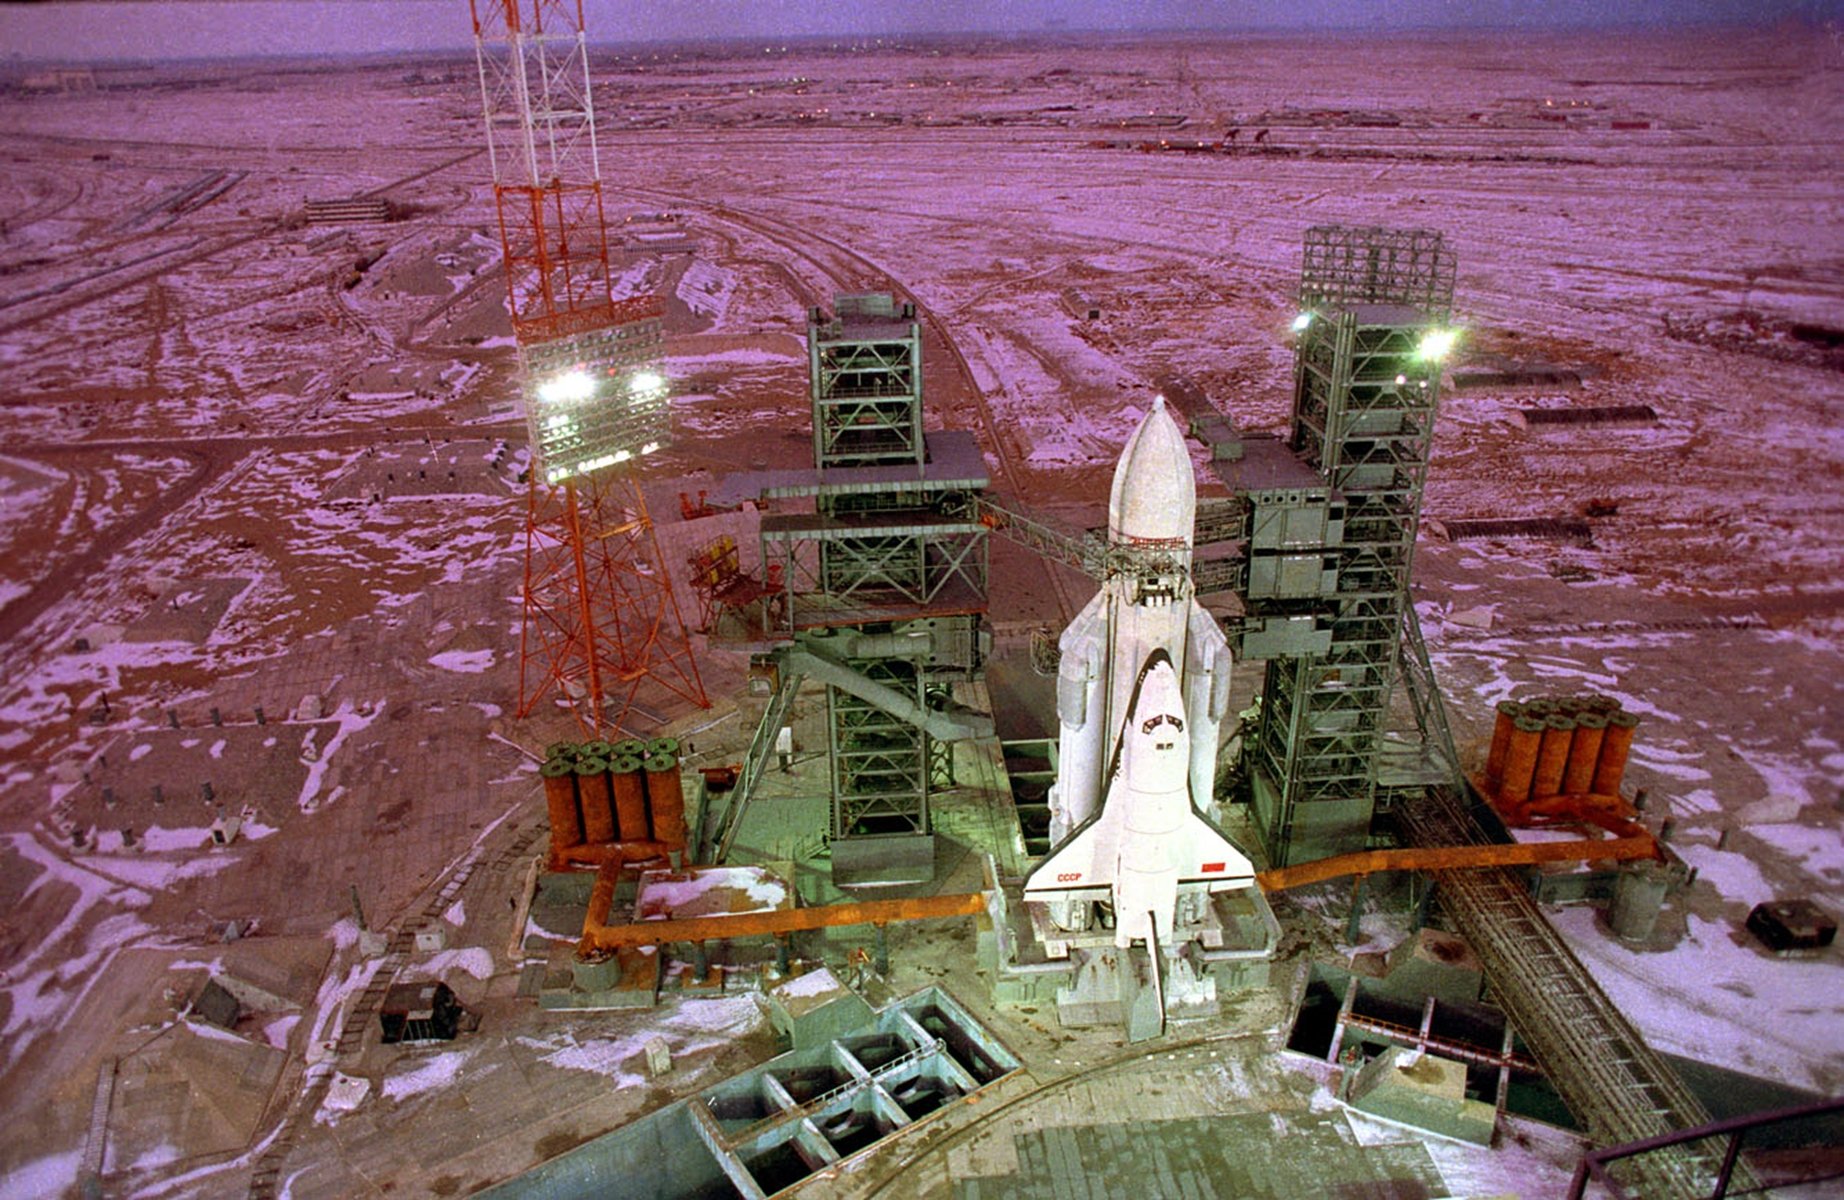 space, Shuttle, Buran, Russian, Space, Cccp, Urrs, Soviet, Vkk, Launching, Base Wallpaper